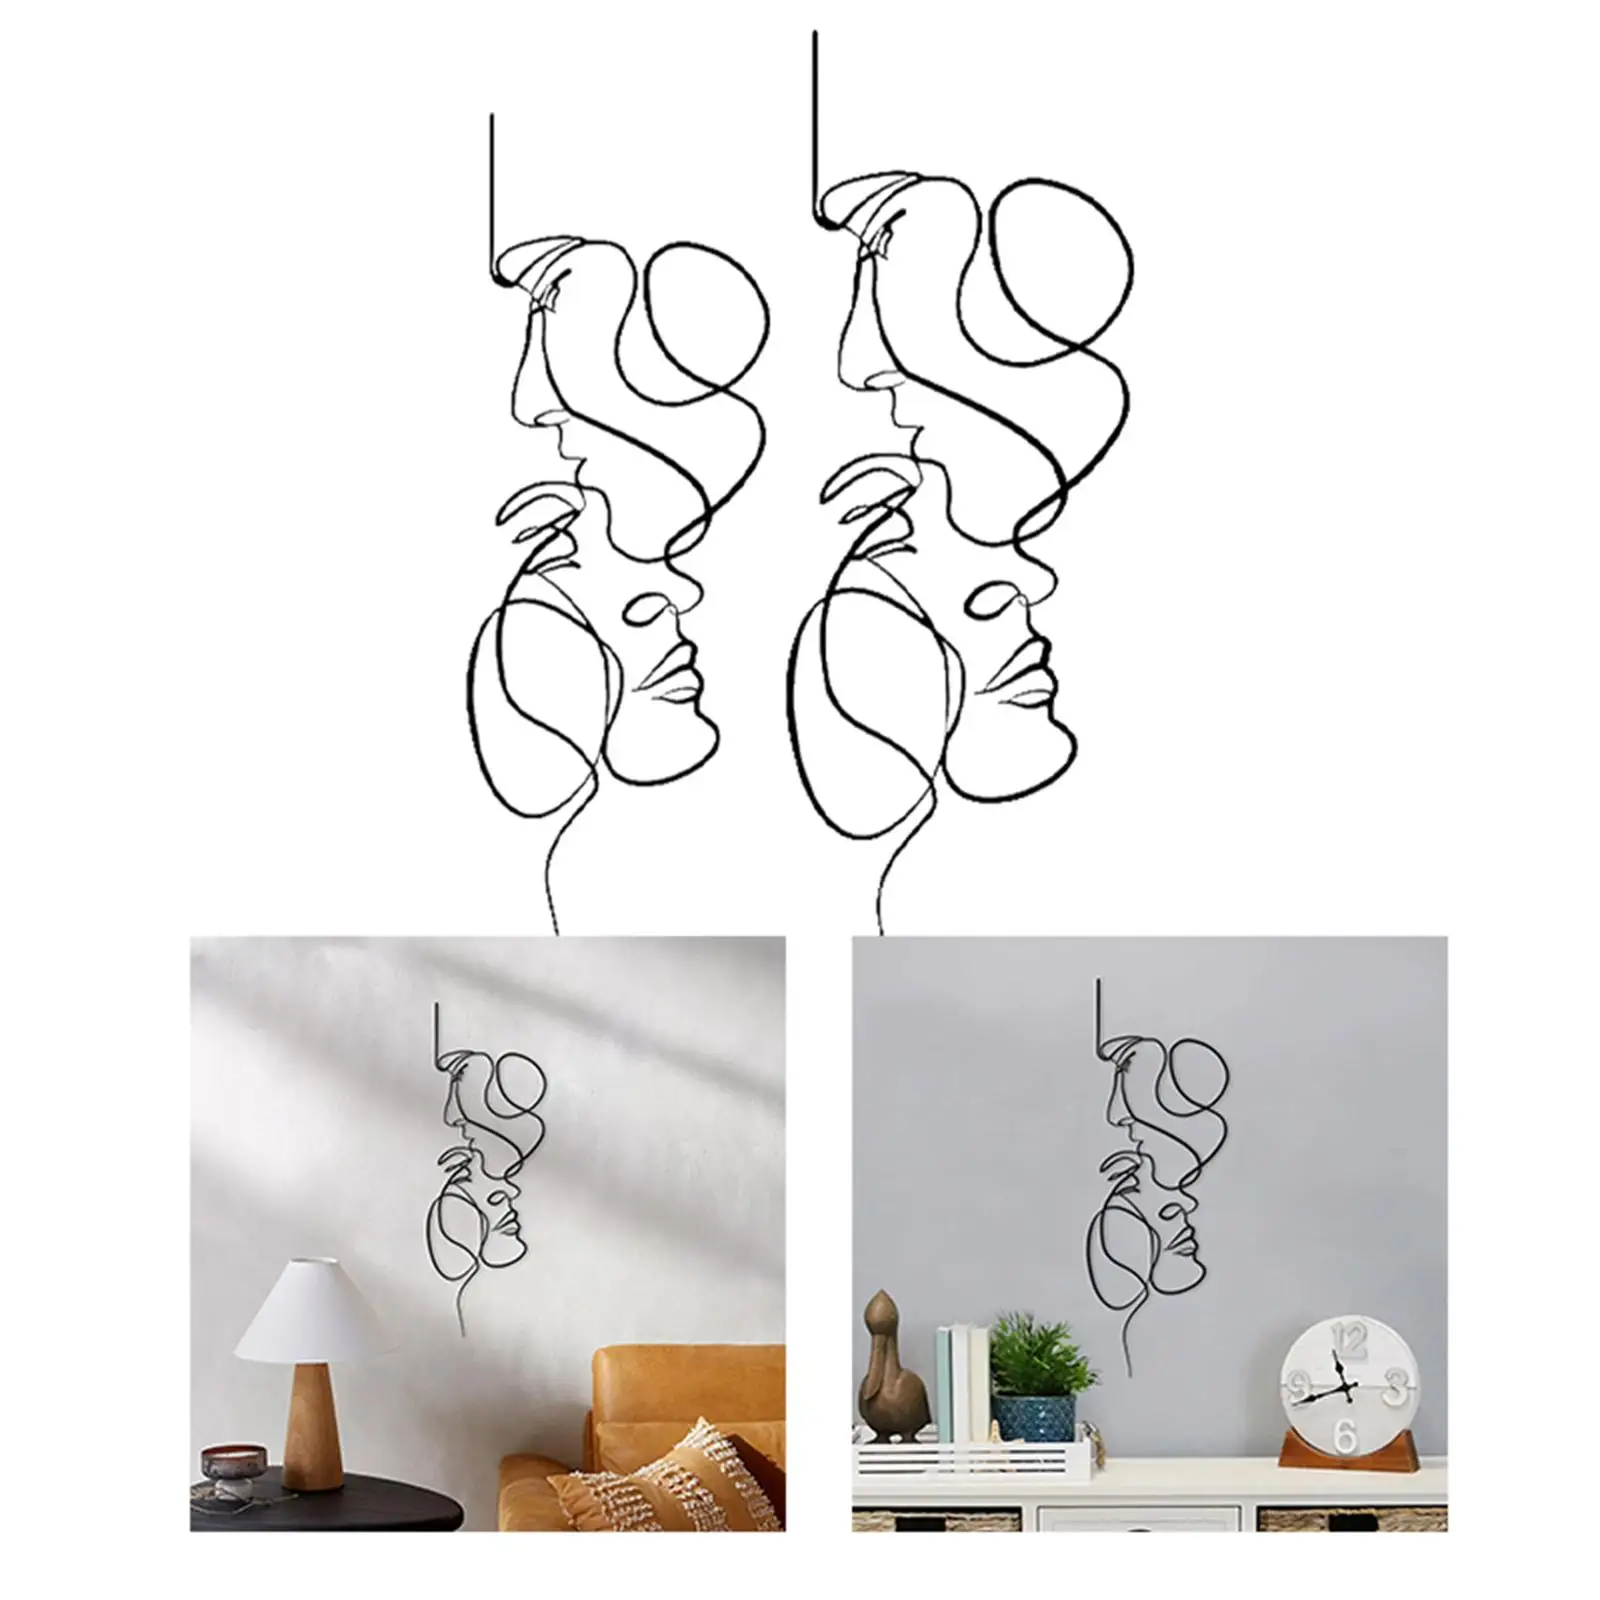 Romantic Hanging Sculptures Display Artwork Decors Indoor Couple Metal Wall Art Decors for Bedroom Cabinet Living Room Farmhouse